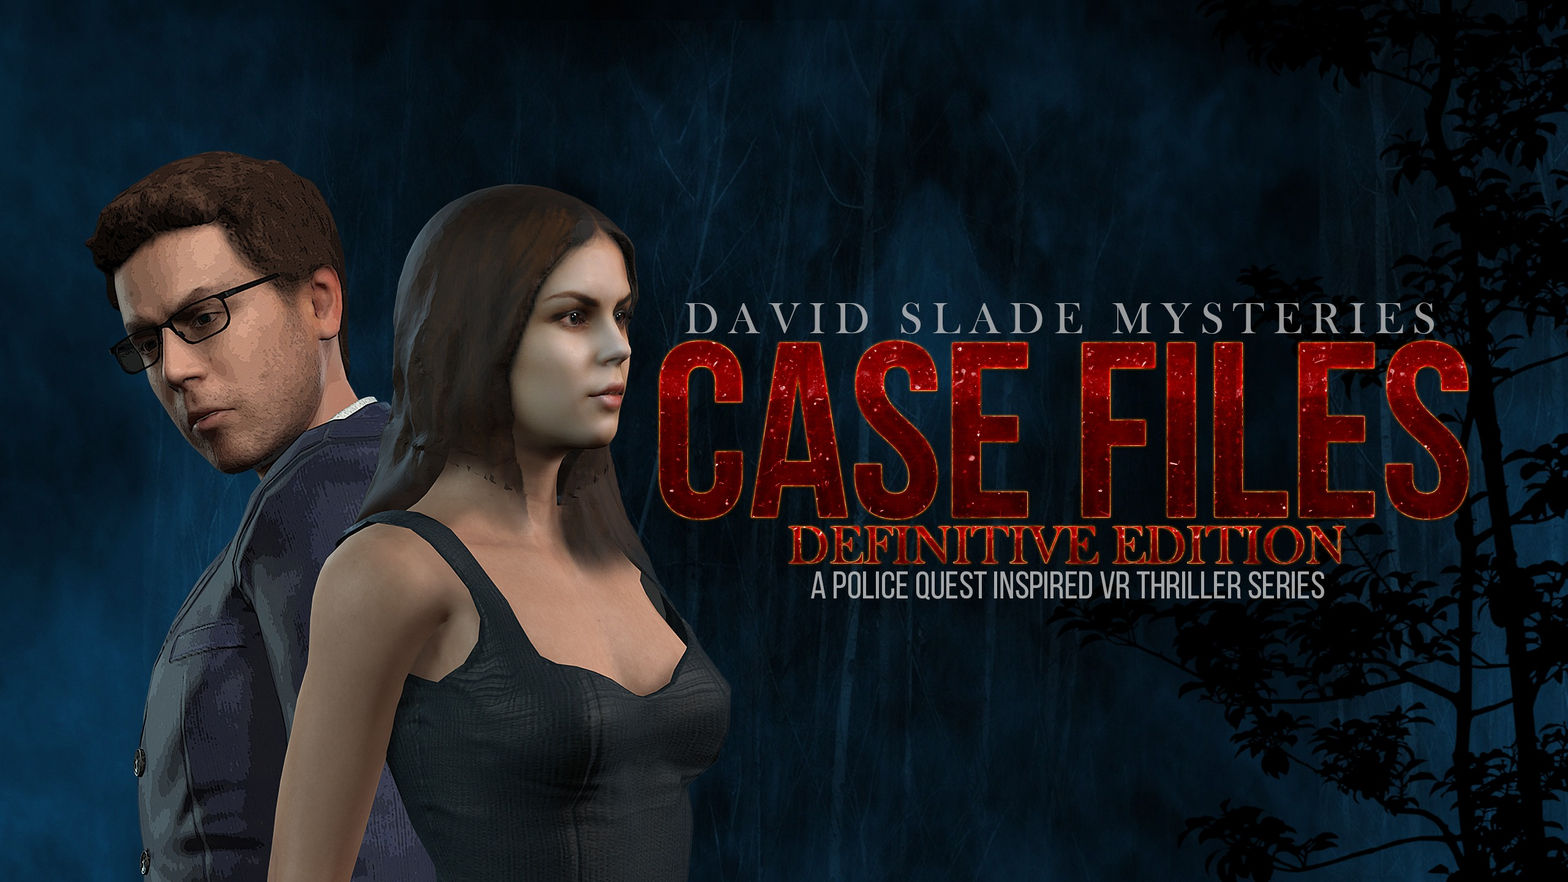 David Slade Mysteries: Case Files